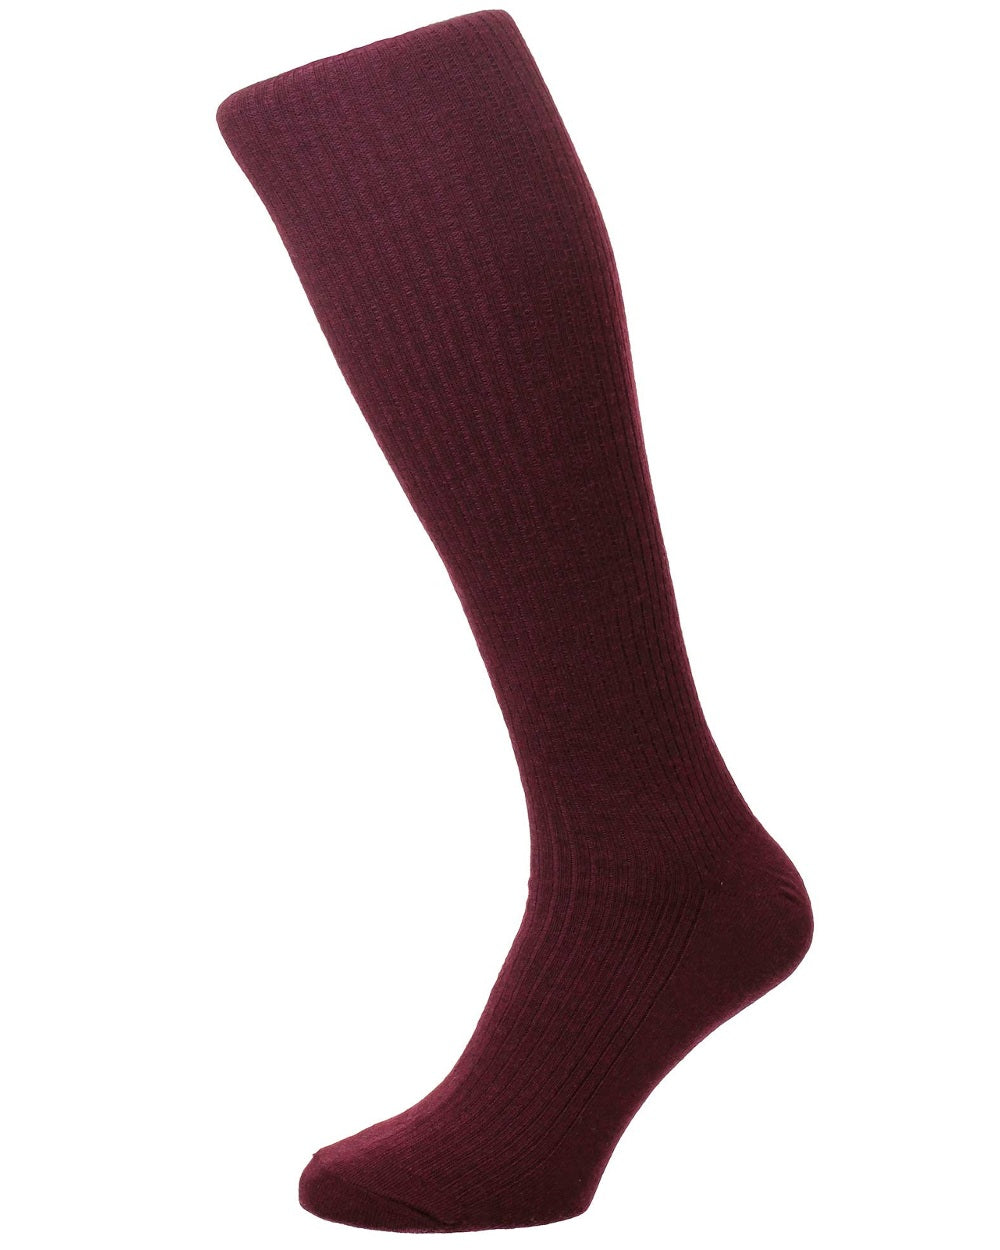 HJ Hall Wool Rich Immaculate Long Socks in Burgundy 